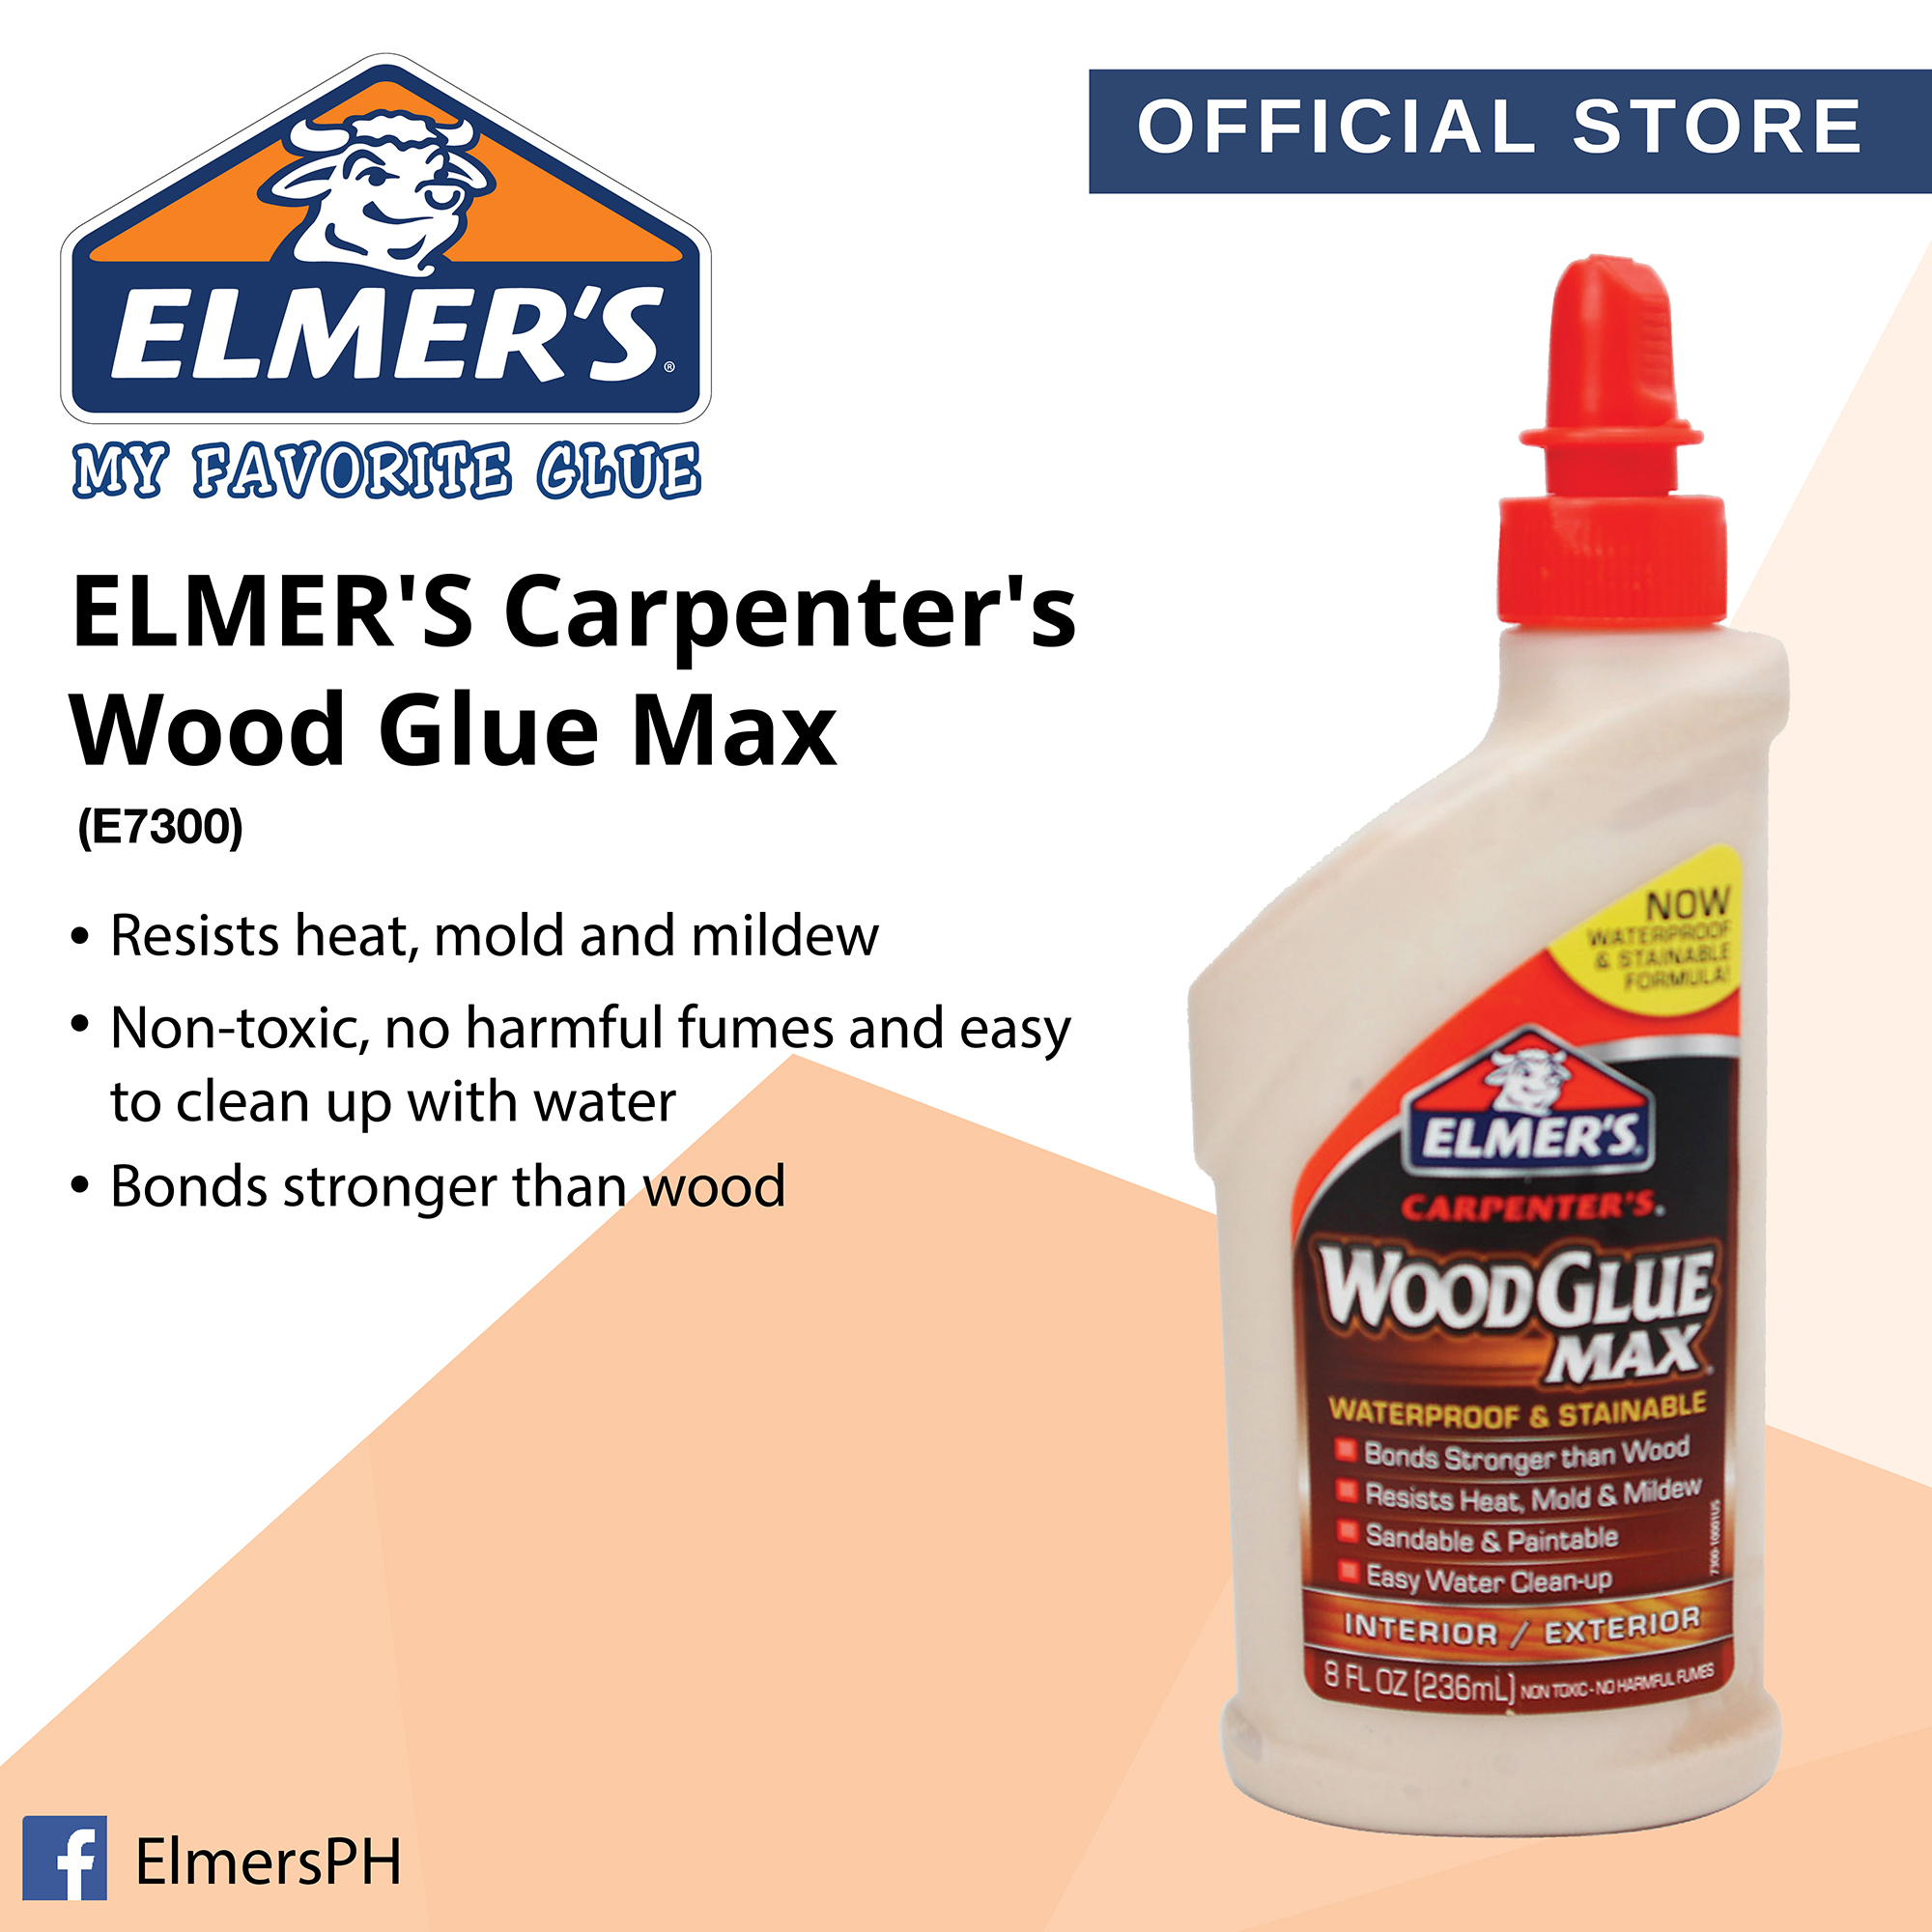 Elmers Carpenter's Wood Glue, Max, Interior/Exterior - 8 fl oz